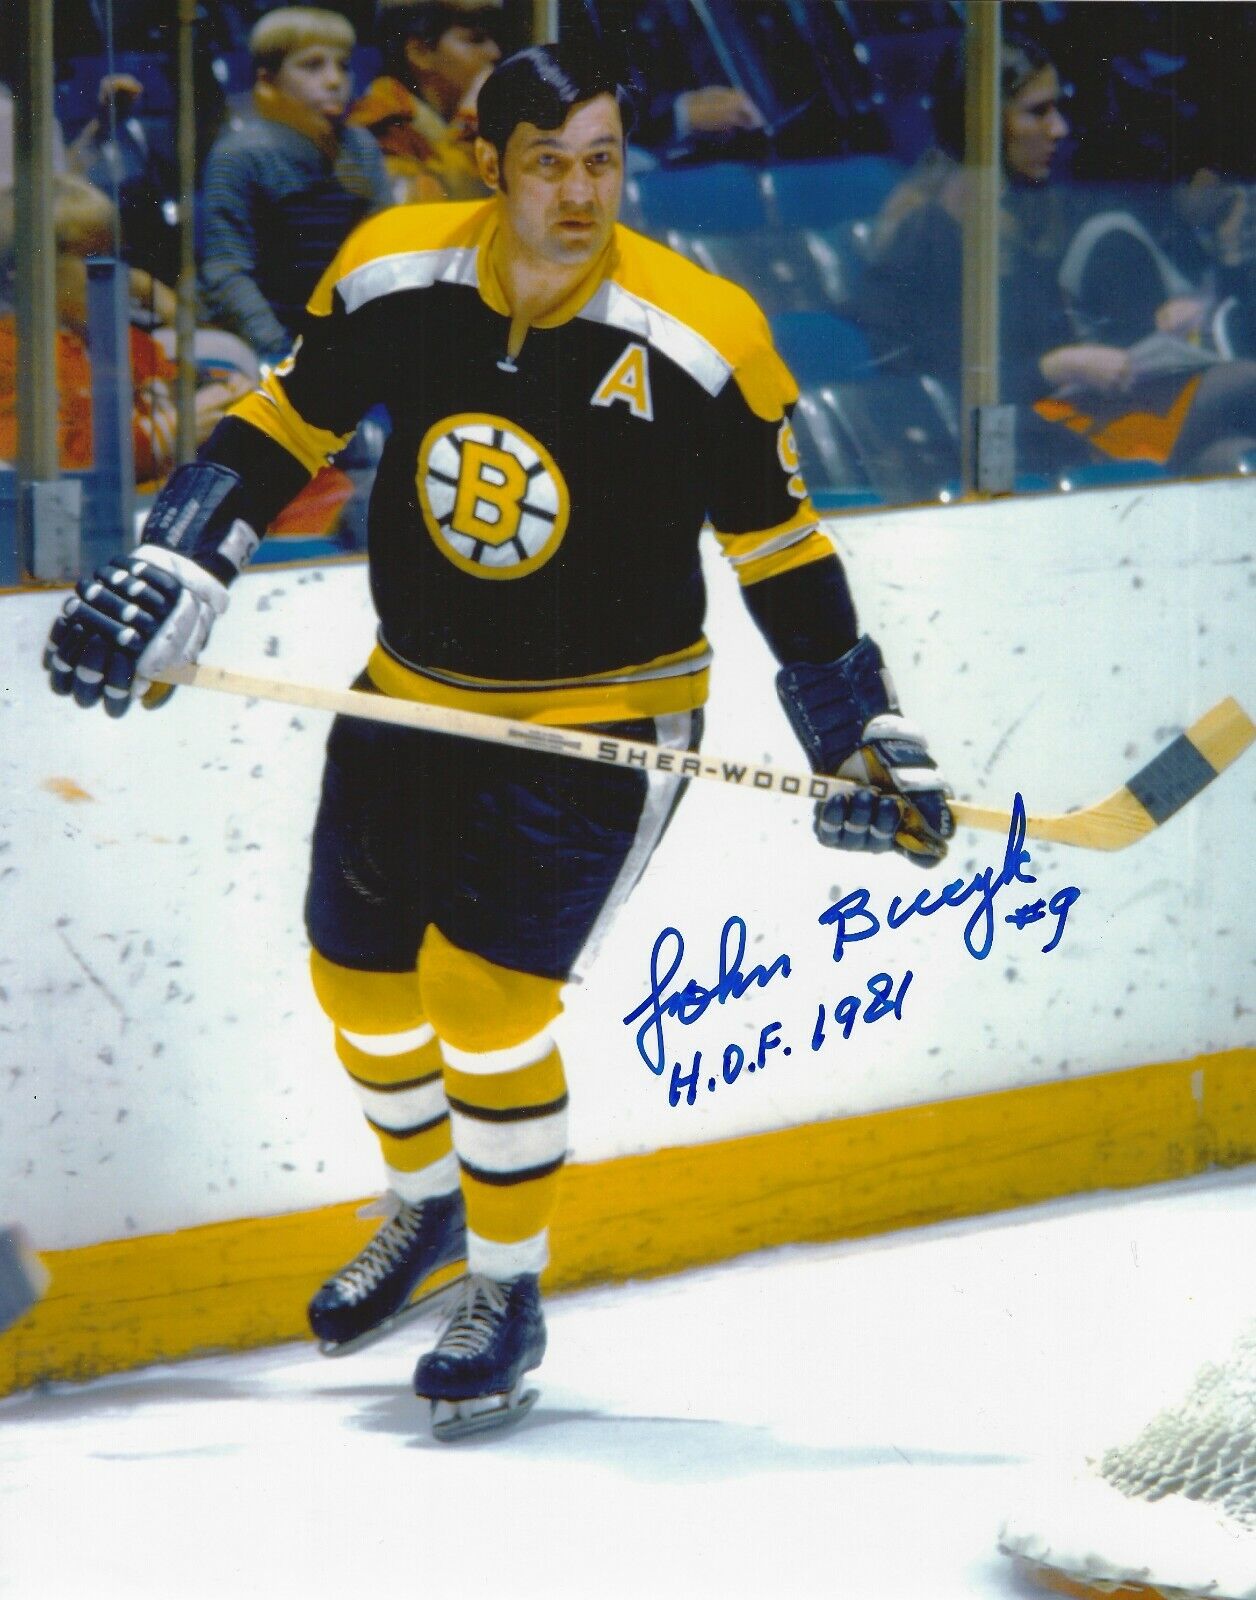 Signed  8x10 Johnny Bucyk Hof 1981 Autographed Boston Bruins Photo - Coa